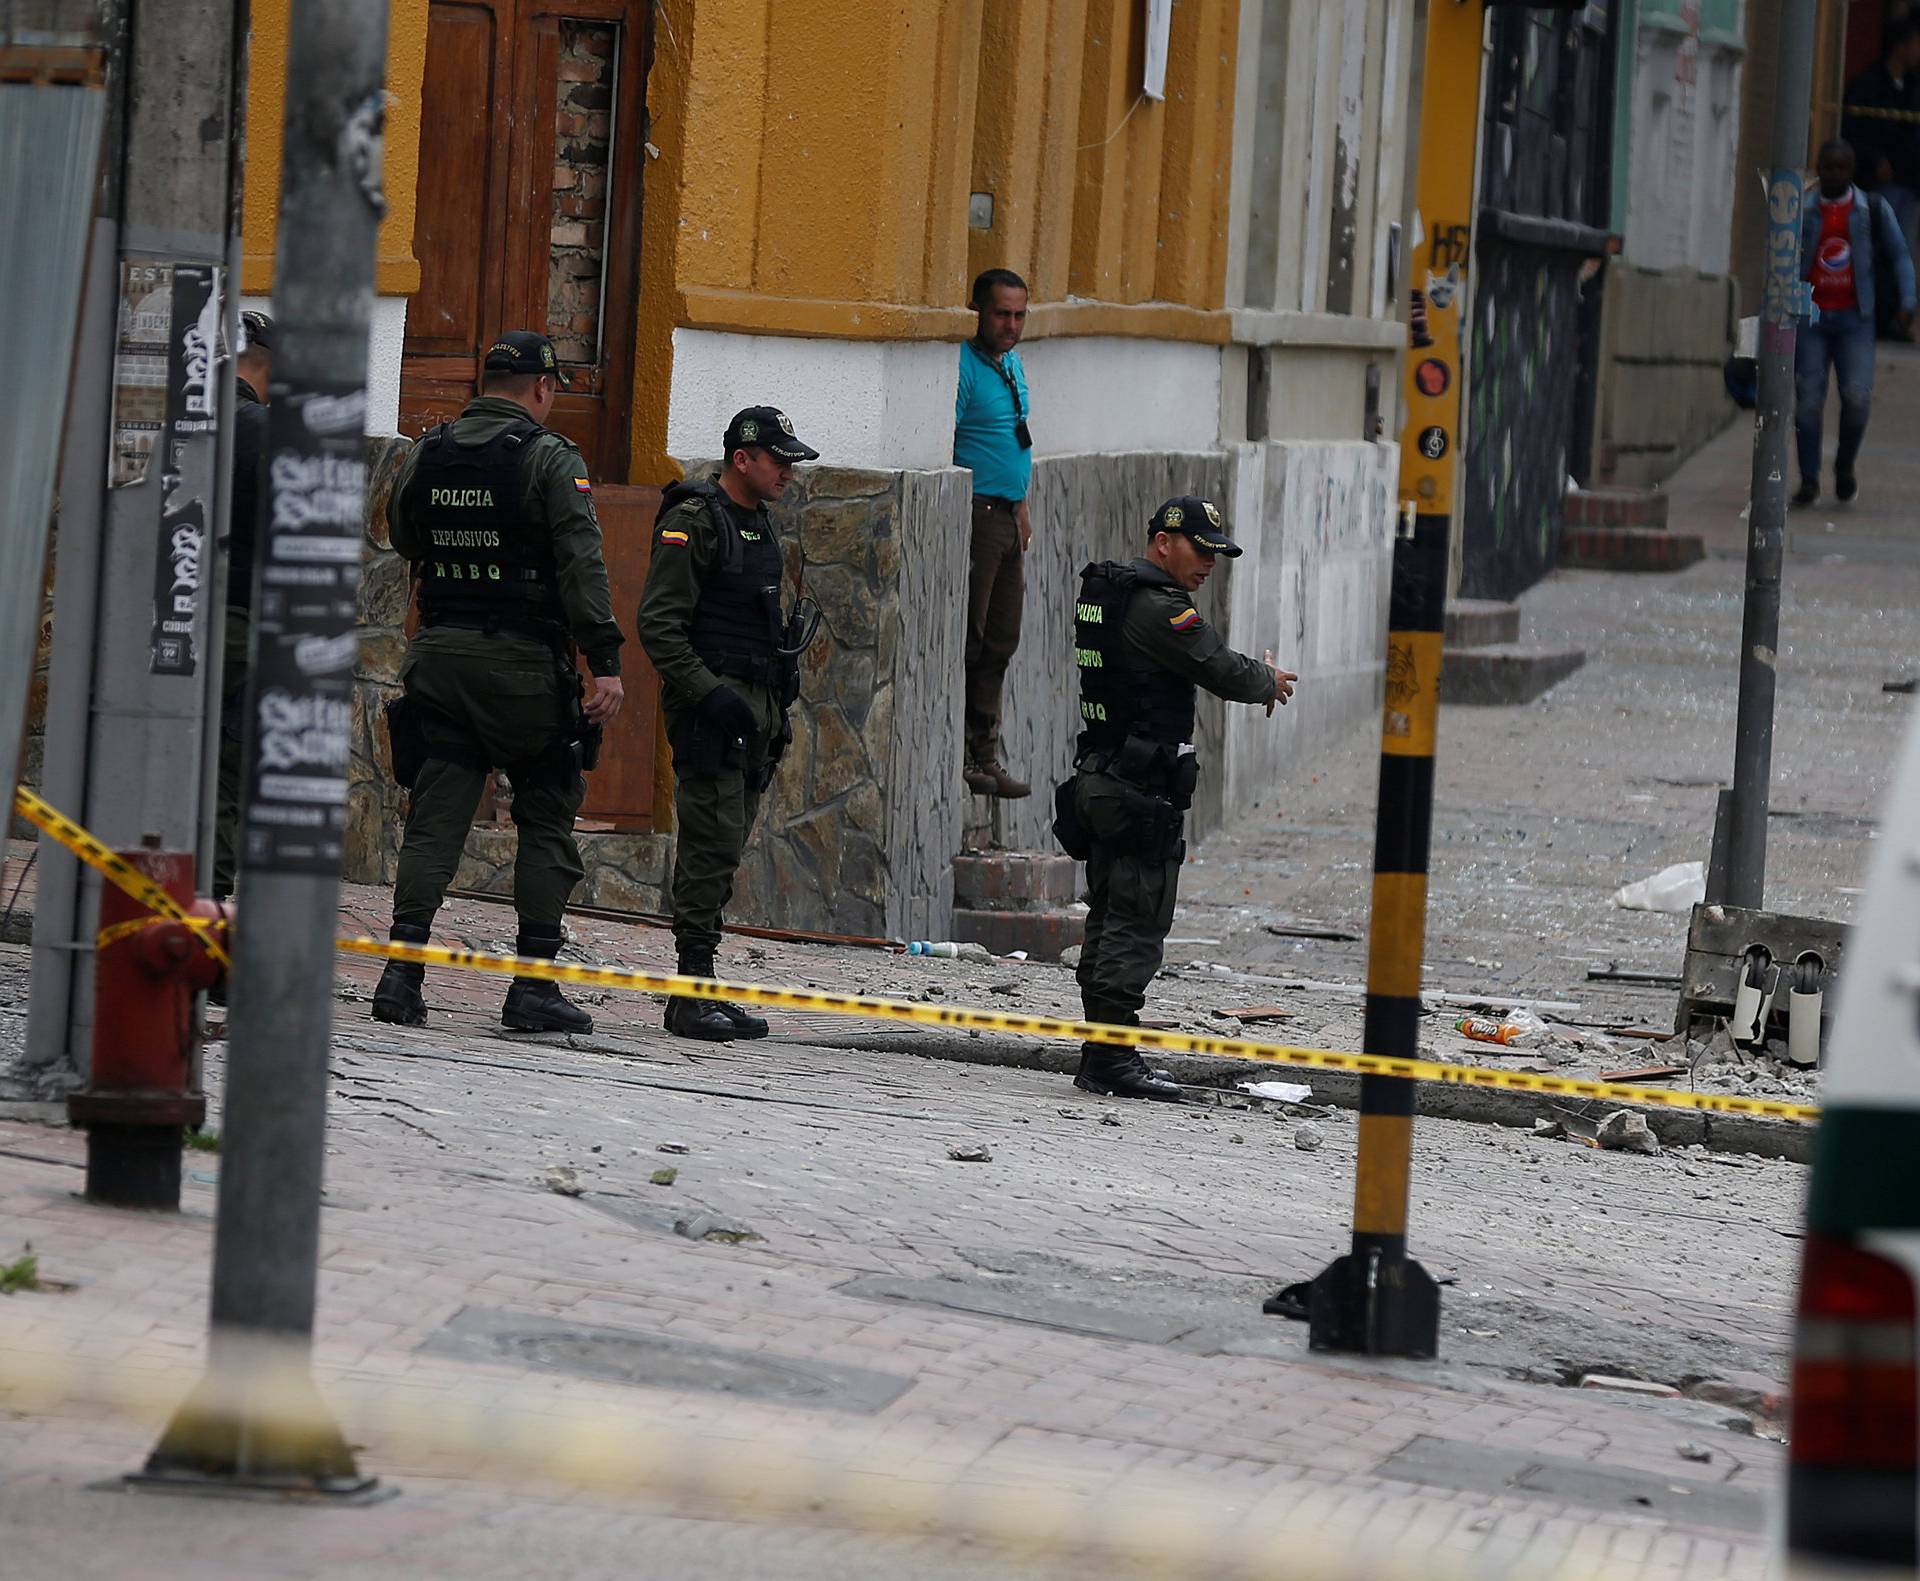 Police work the scene where an explosion occurred near Bogota's bullring